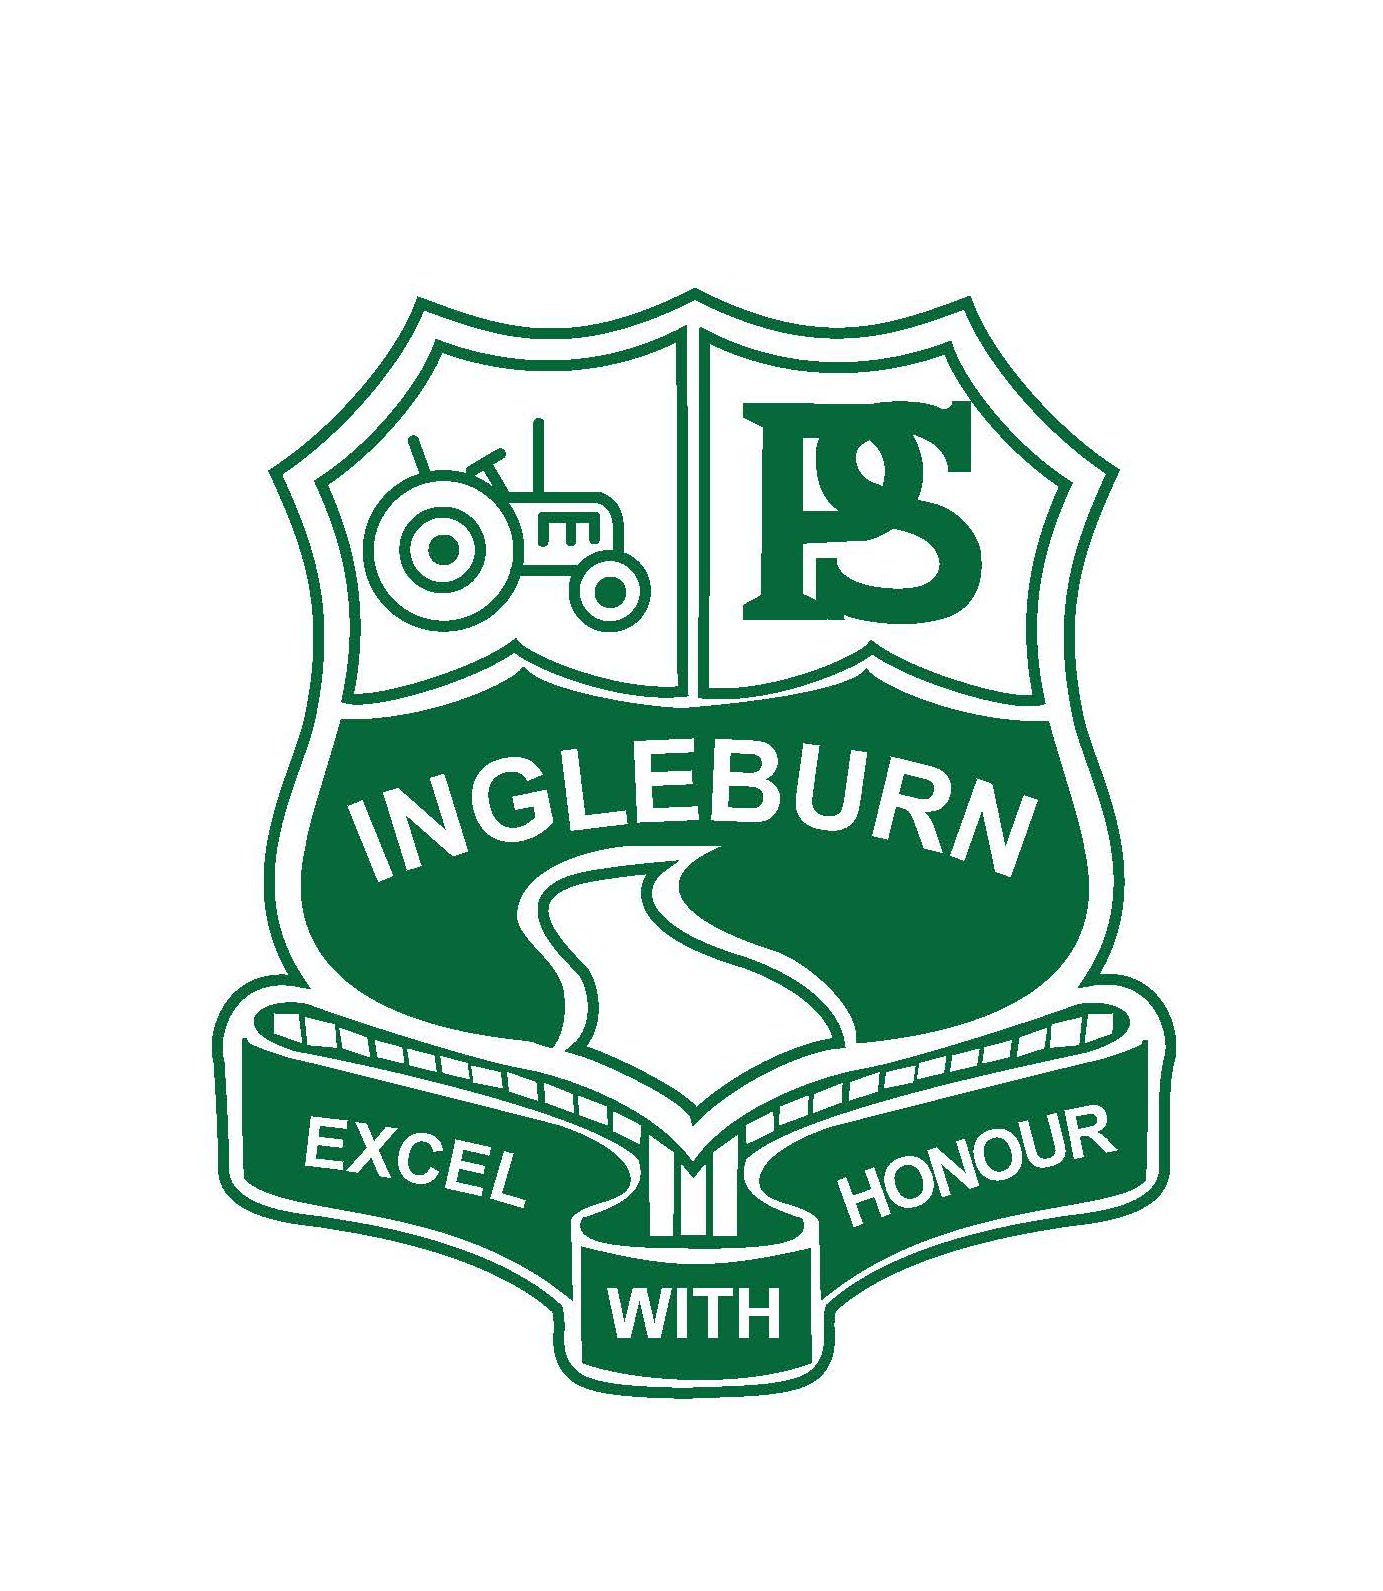 Ingleburn Public School, Ingleburn, NSW